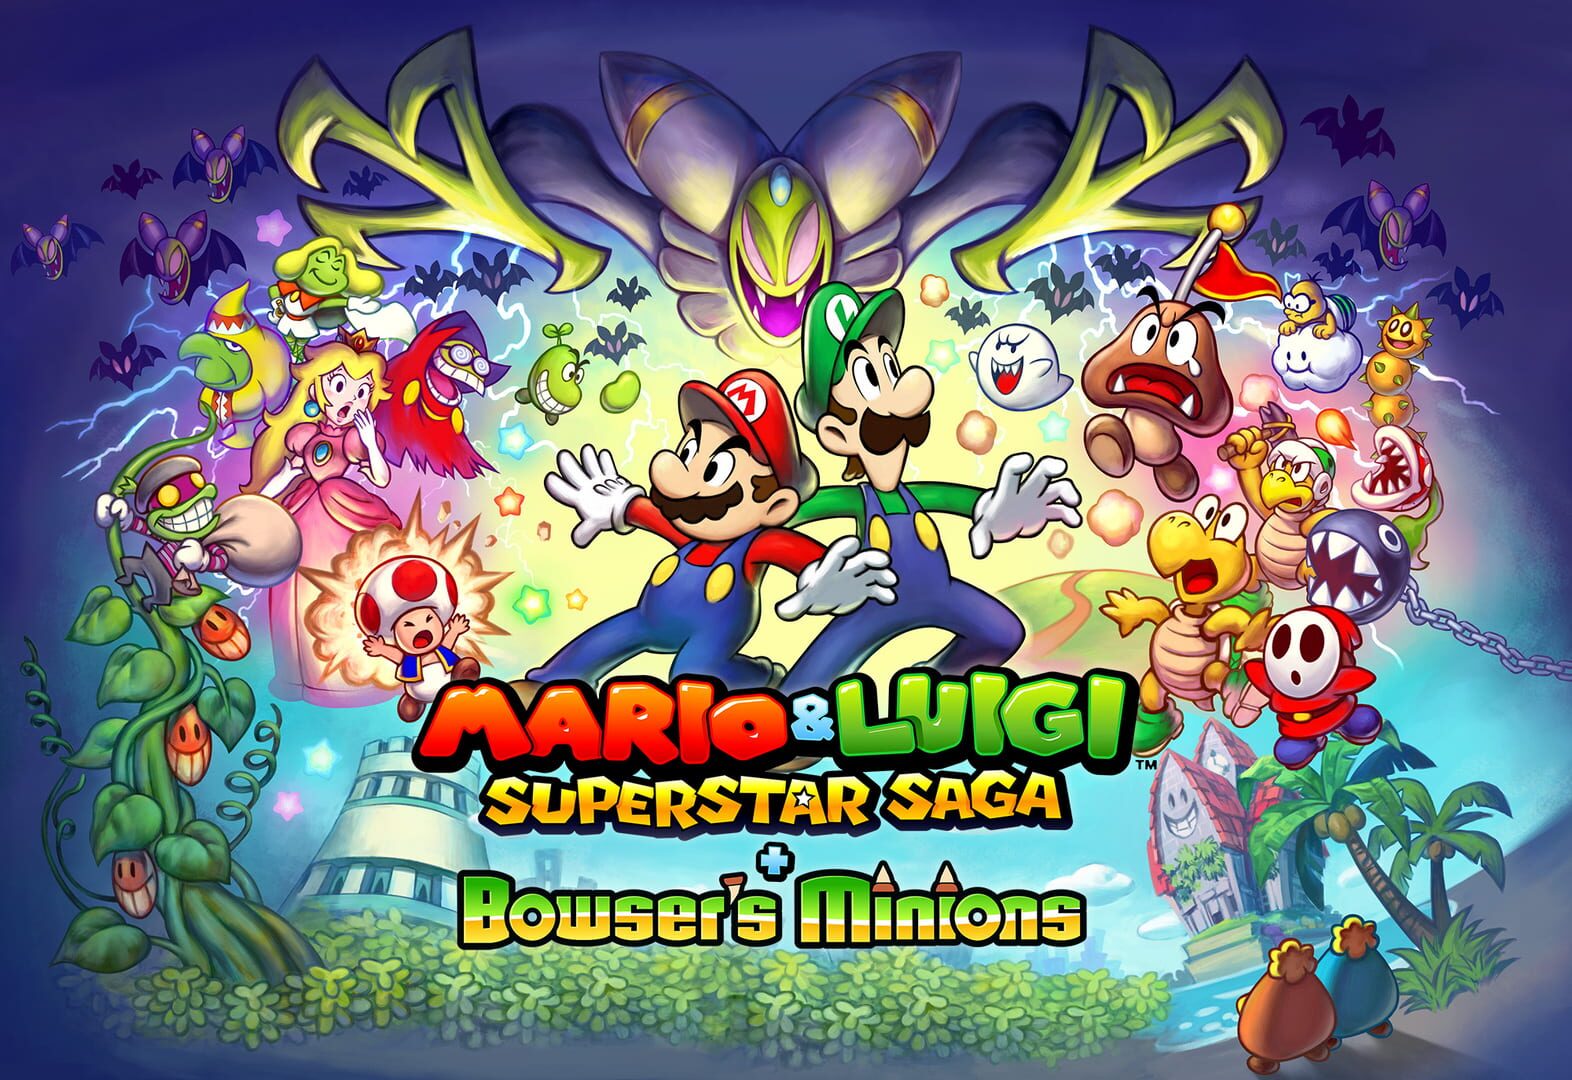 Mario & Luigi: Superstar Saga + Bowser's Minions Image